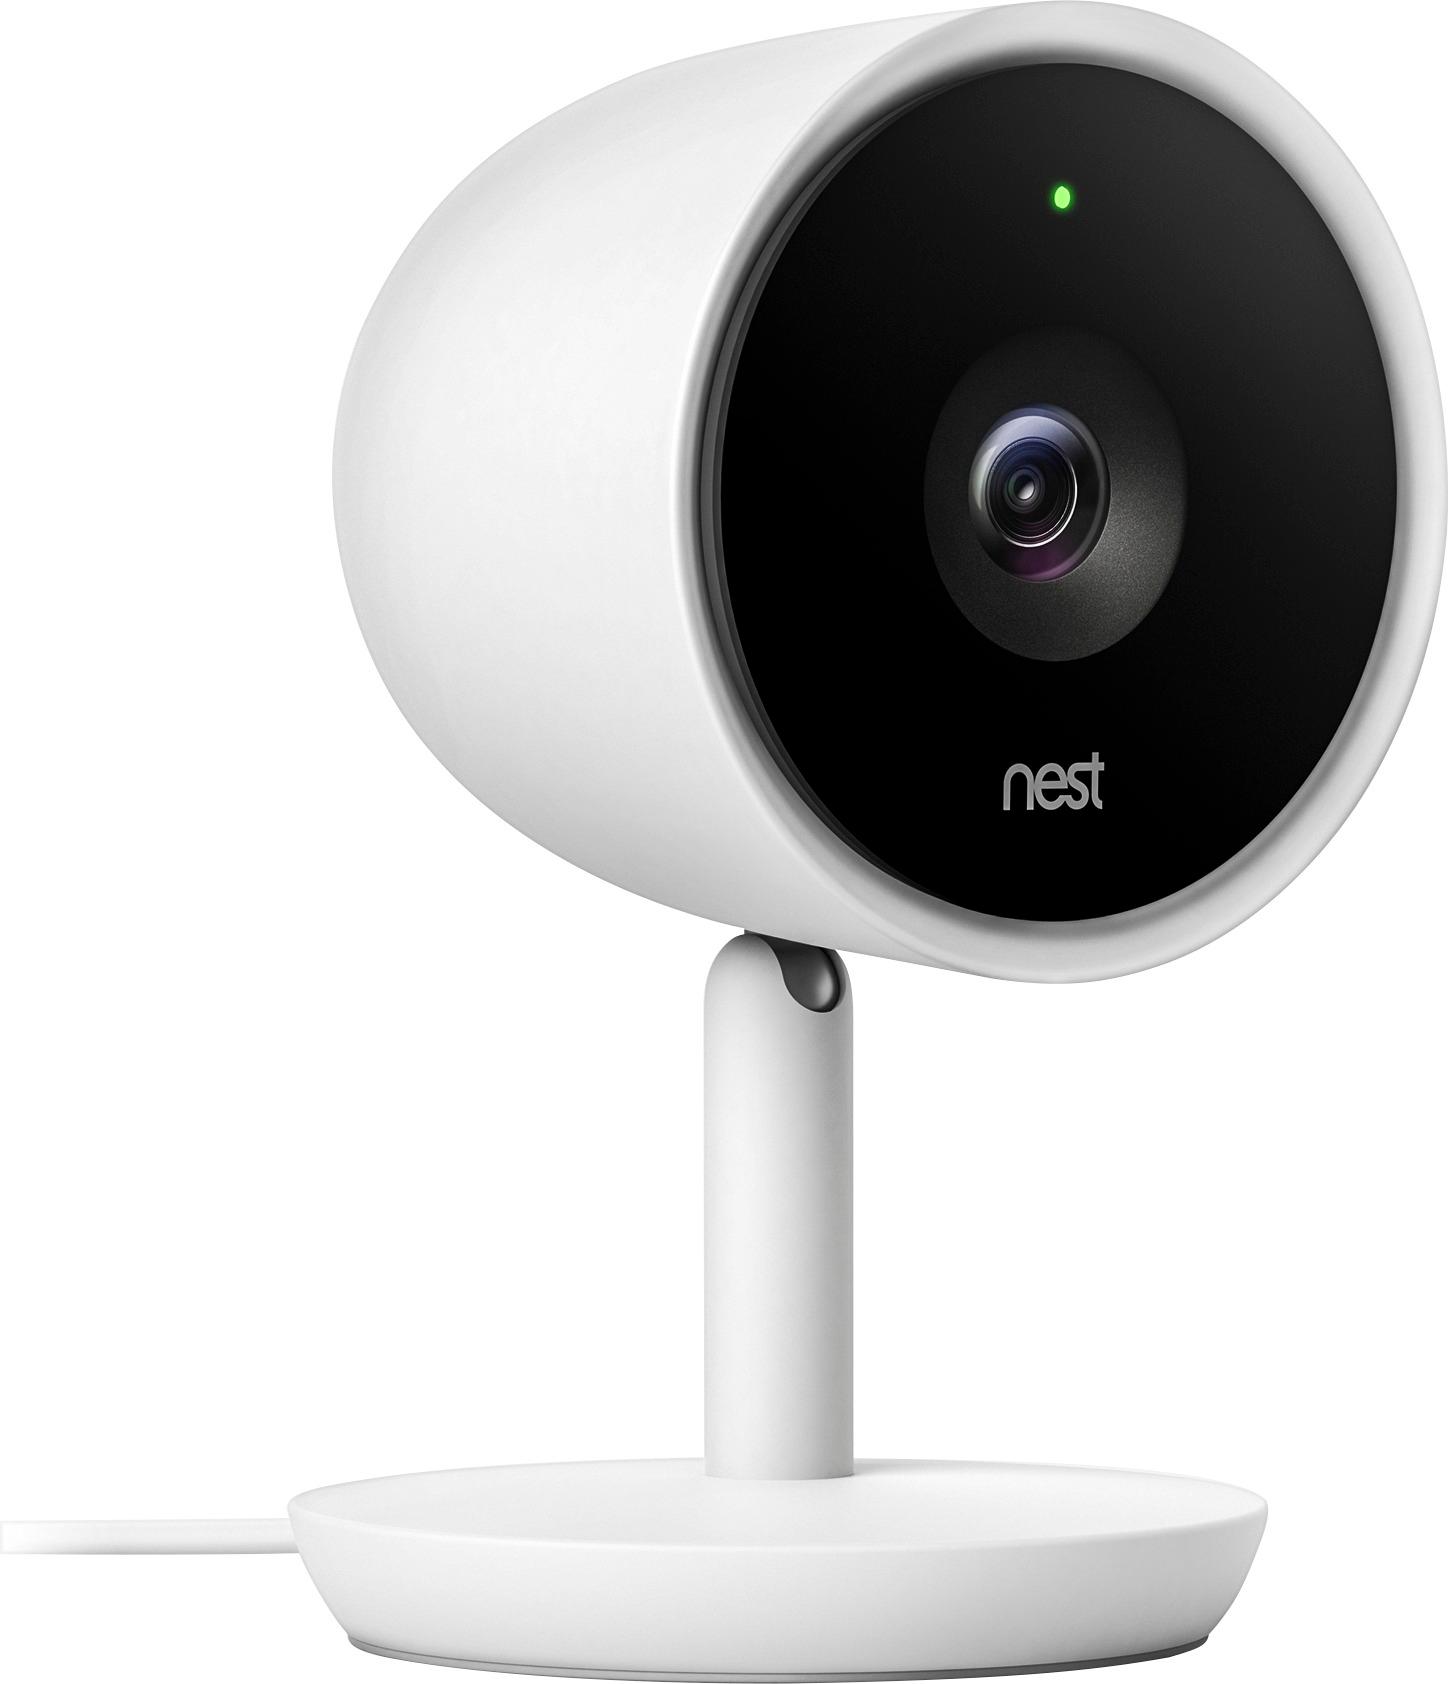 nest security camera best buy